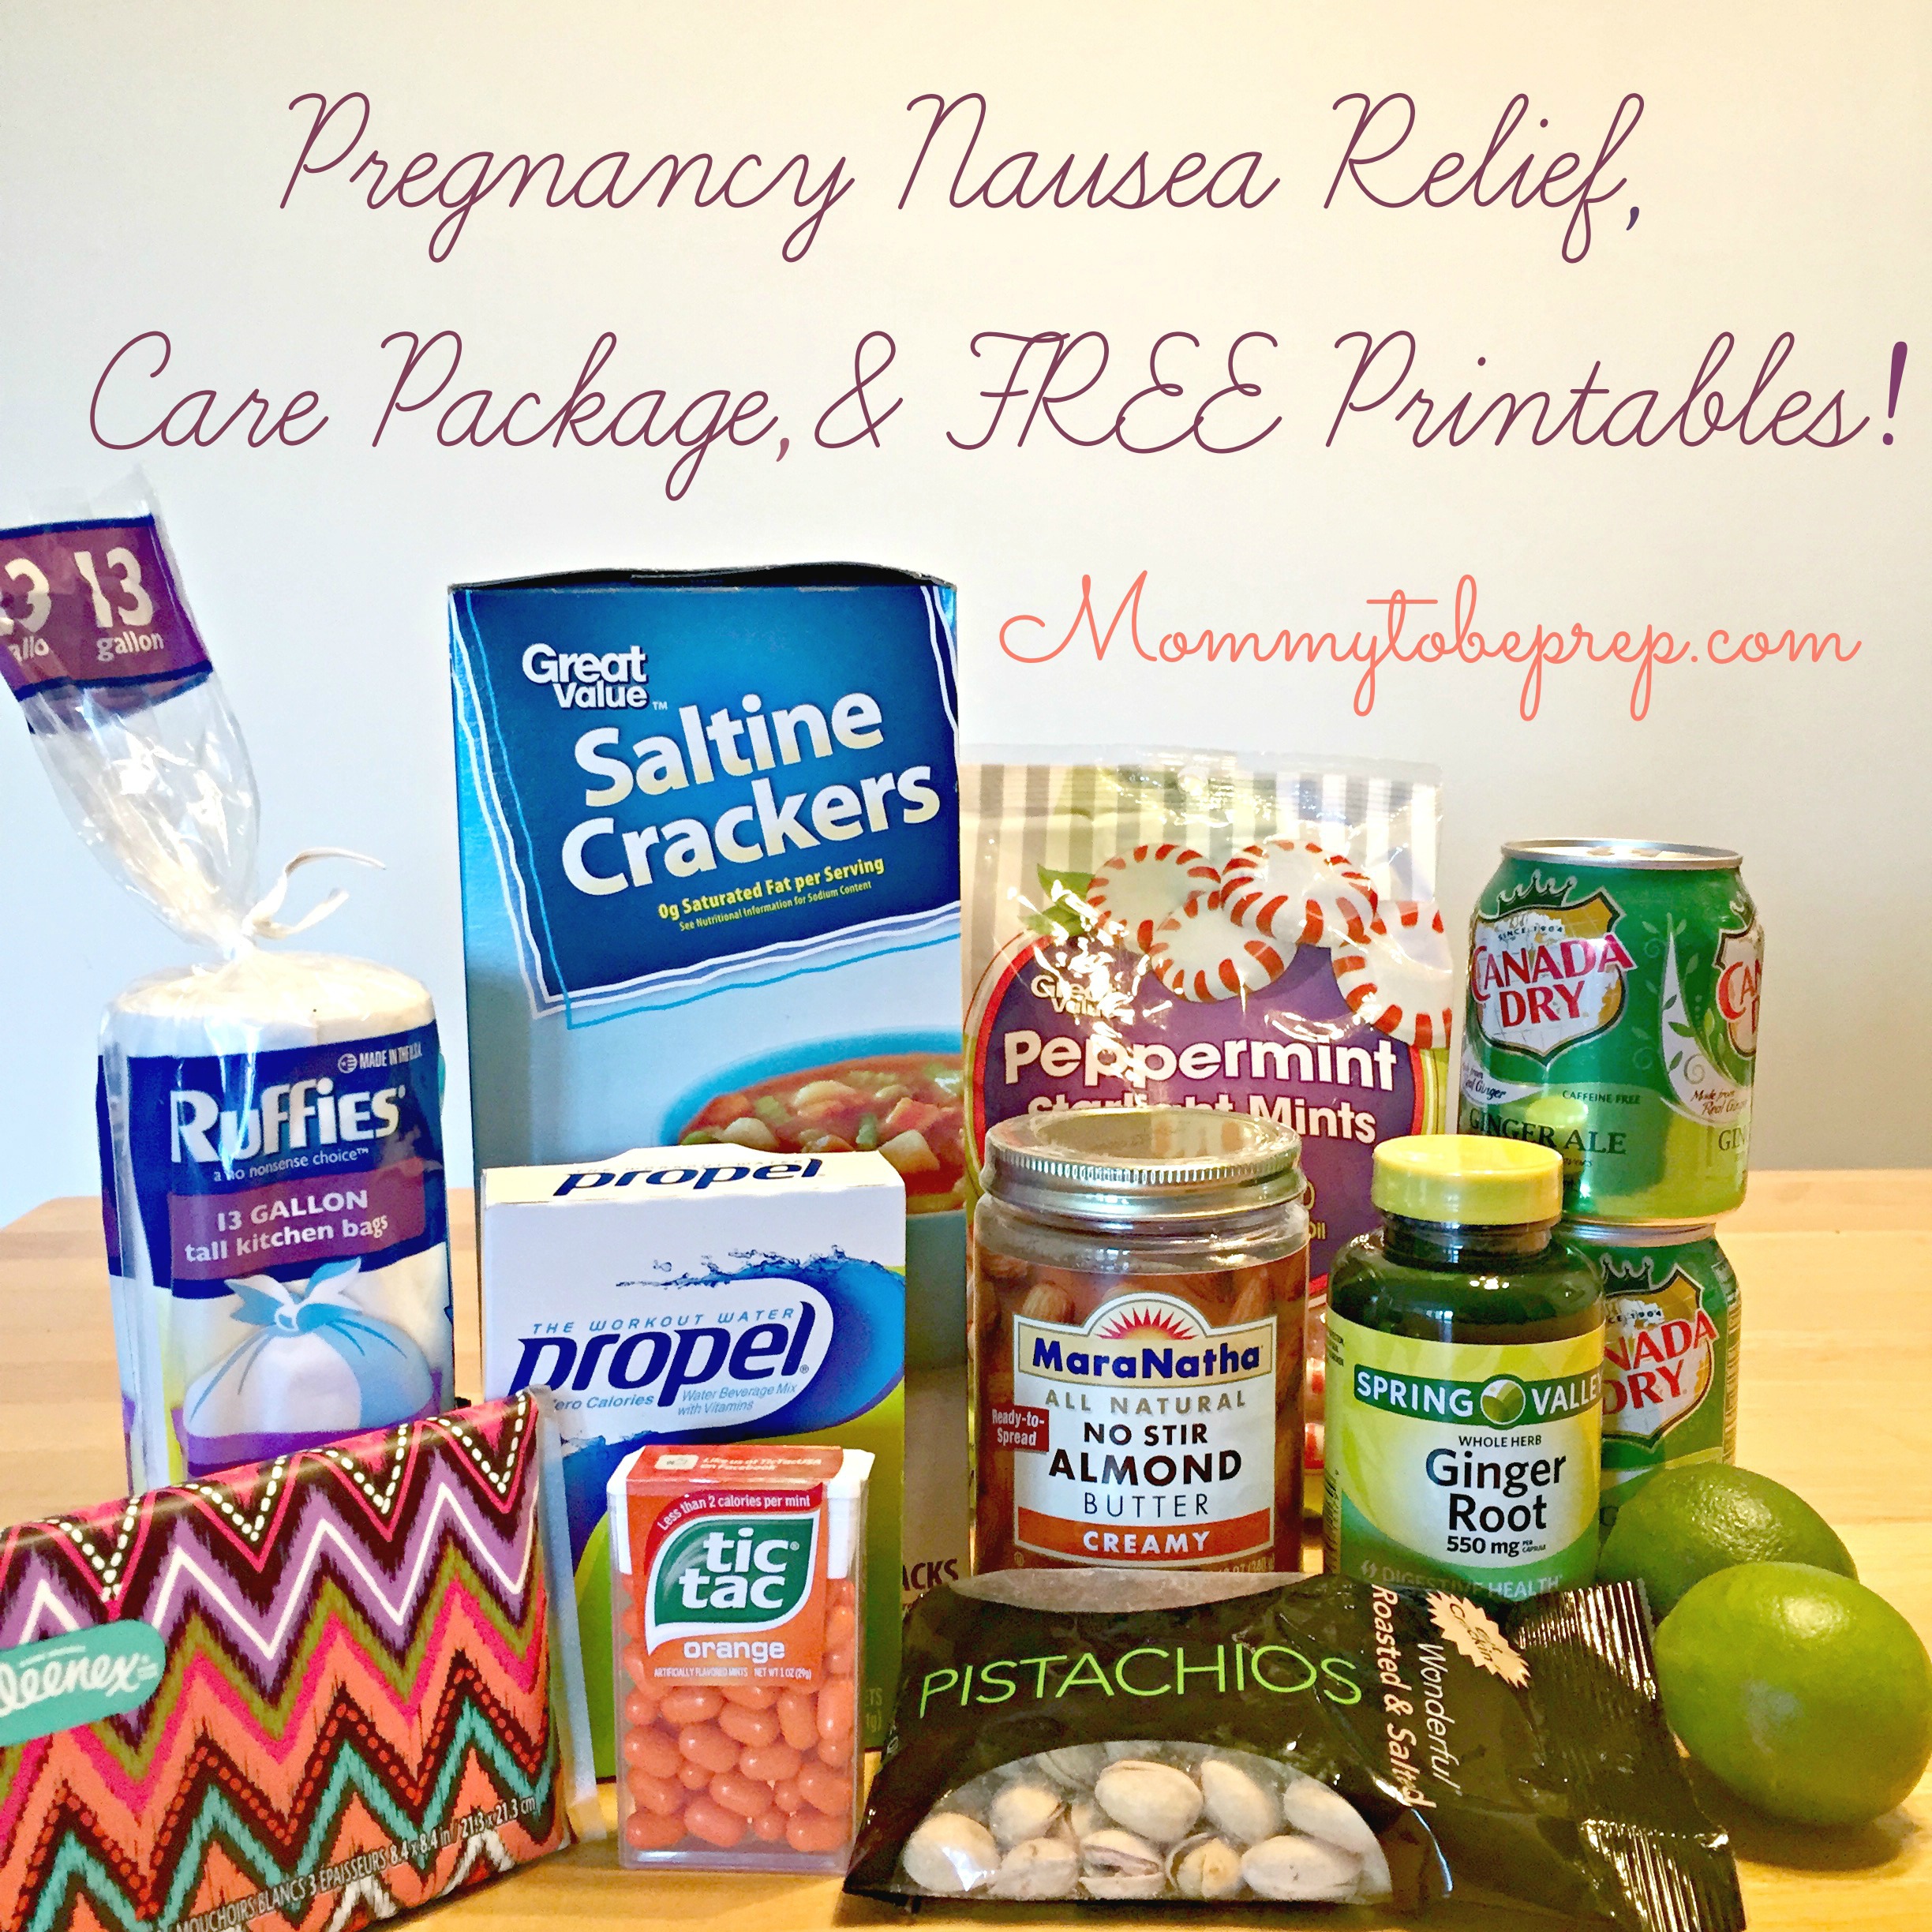 Pregnancy Nausea Relief, Care Package, & Free Printables